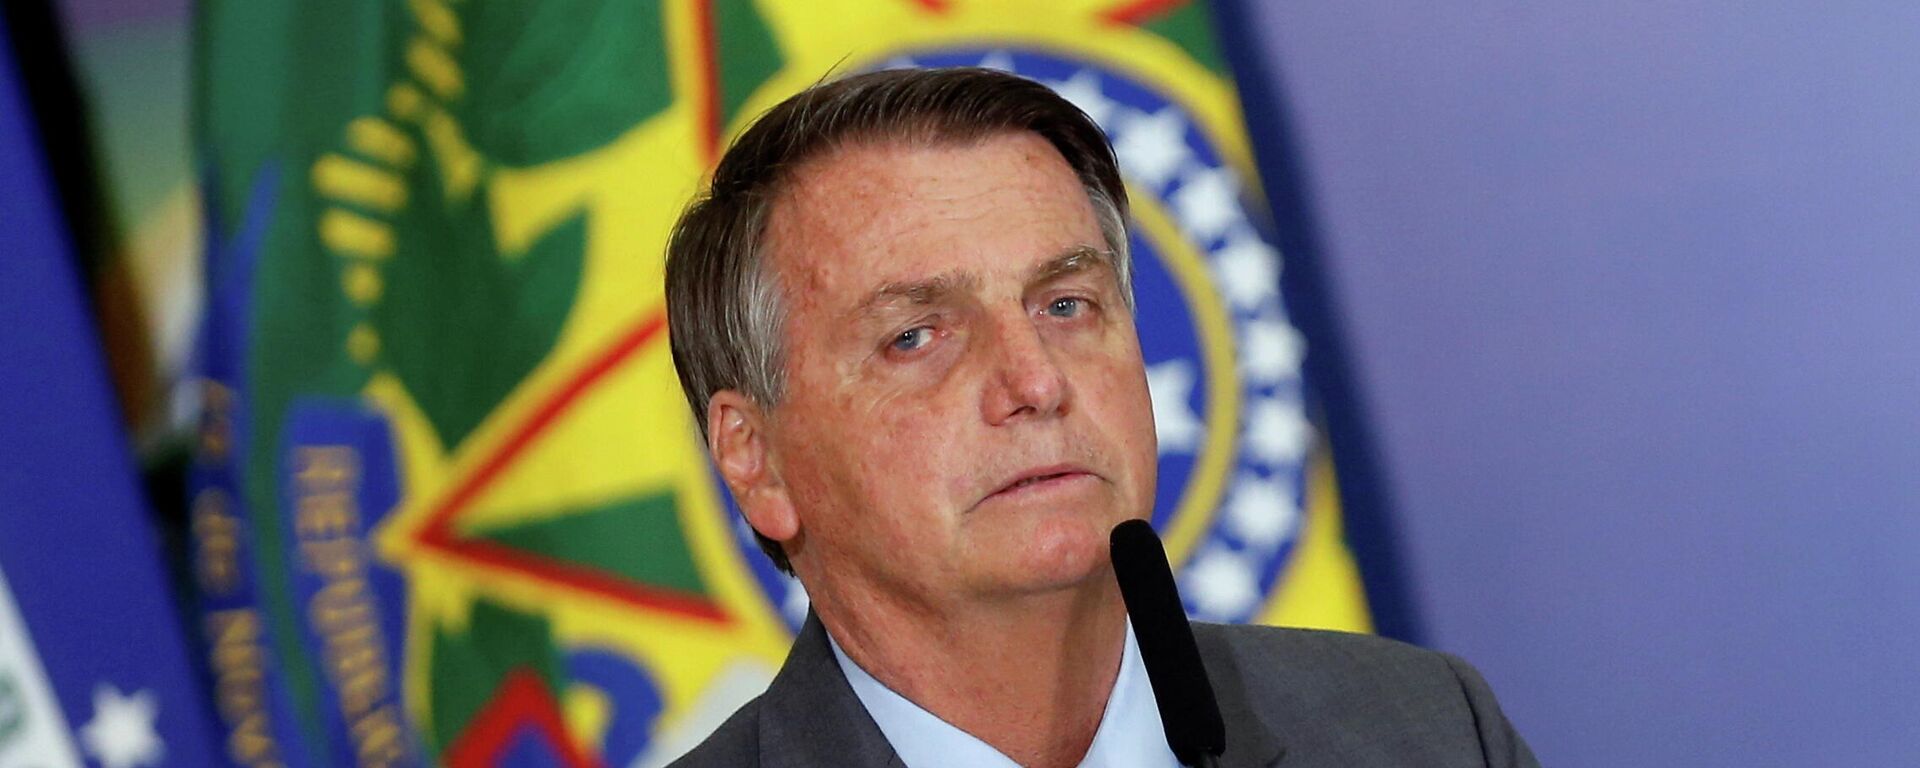 Jair Bolsonaro, presidente de Brasil - Sputnik Mundo, 1920, 19.08.2021